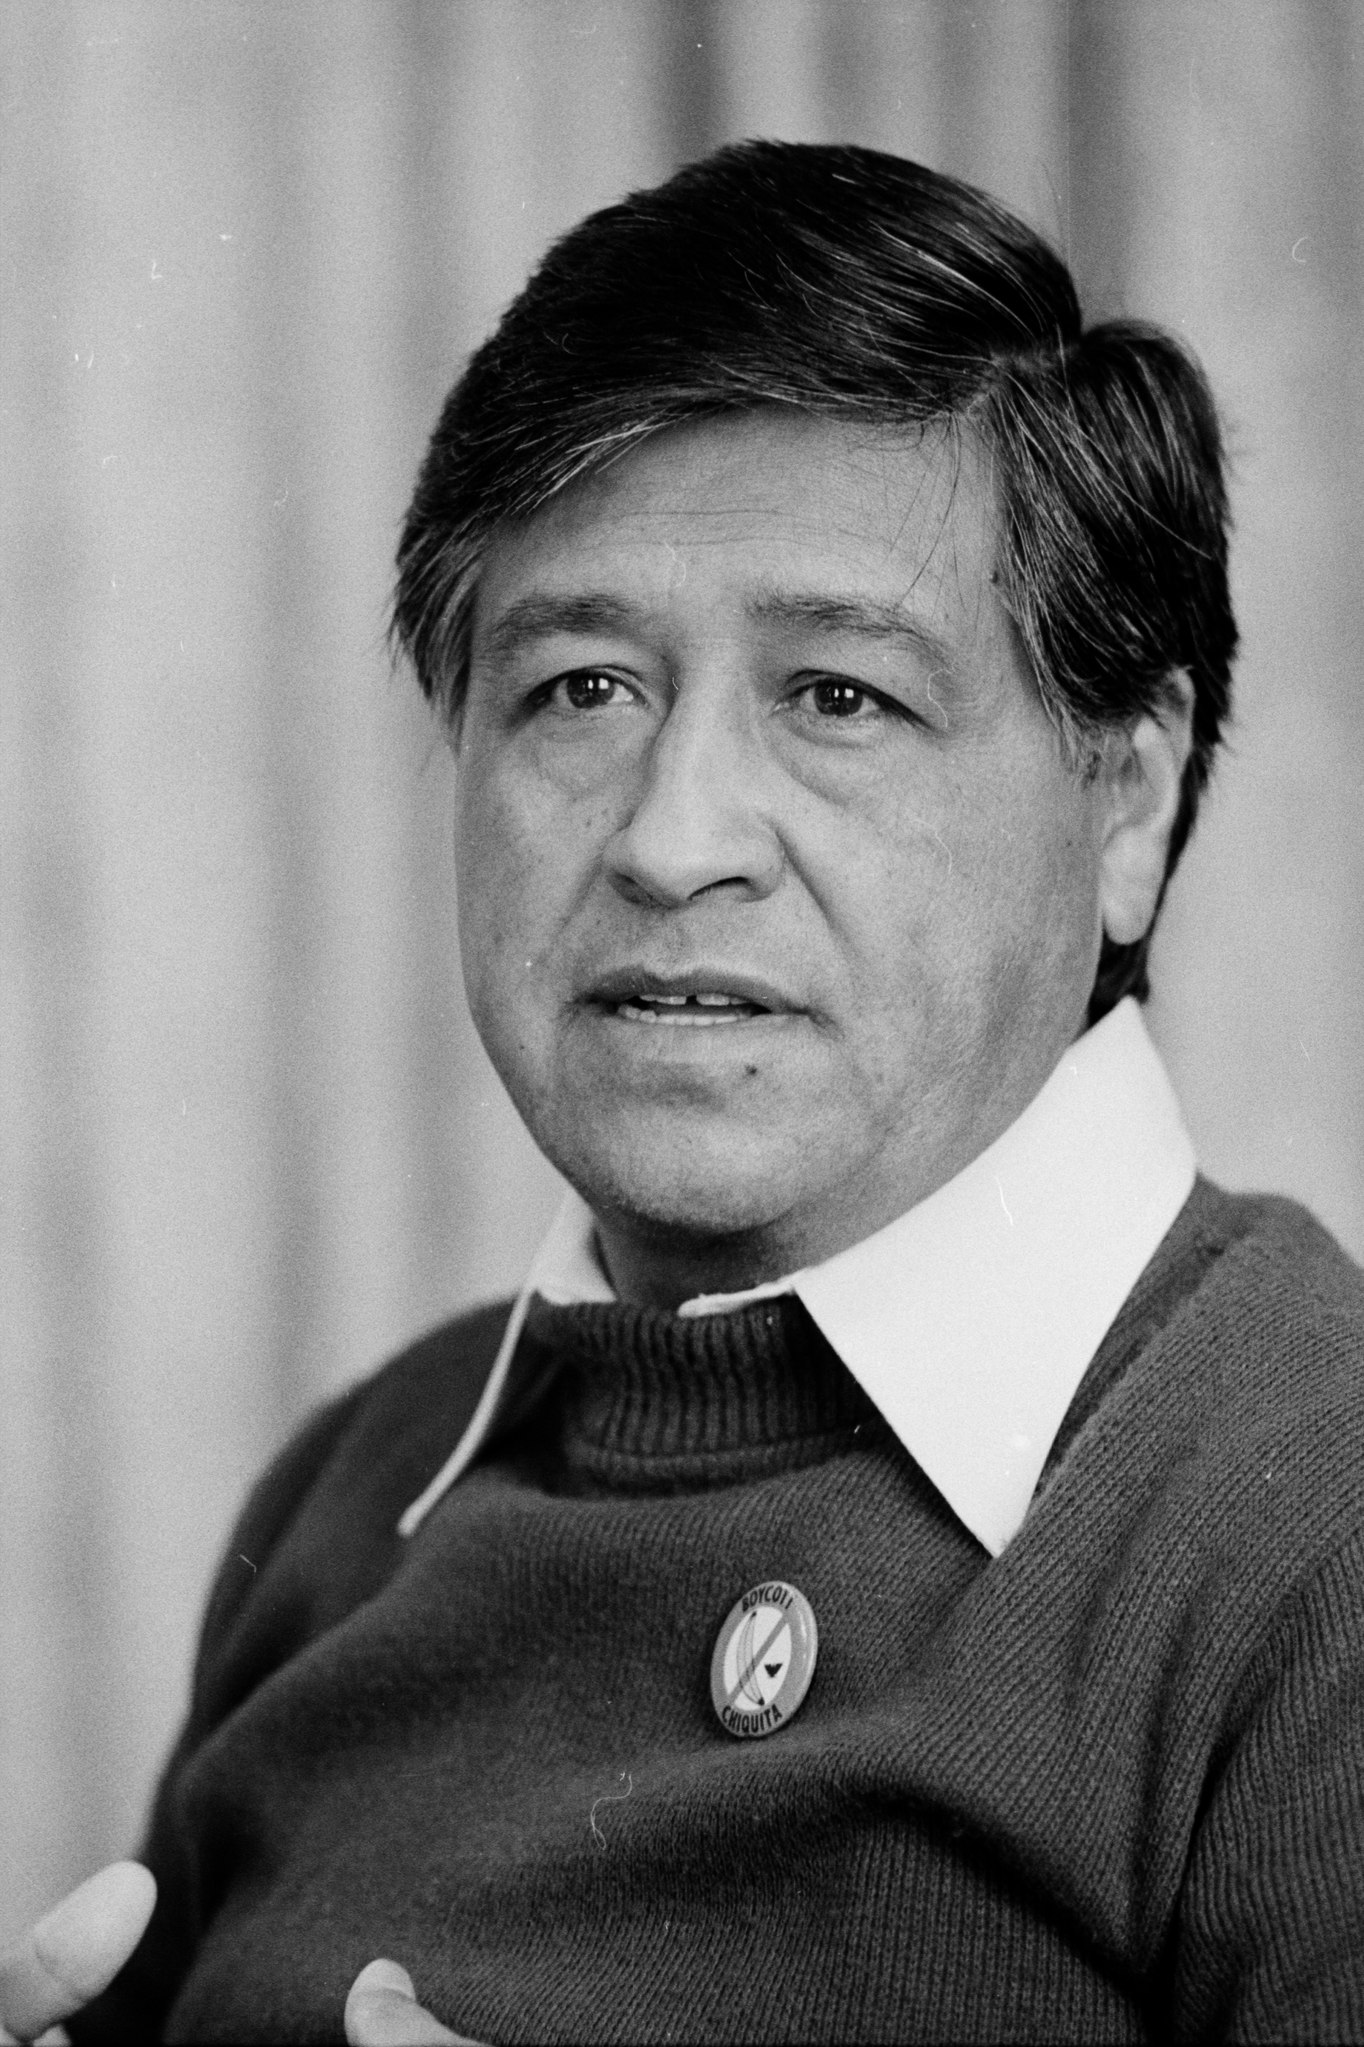 César Chávez, a prominent labor leader and civil rights activist